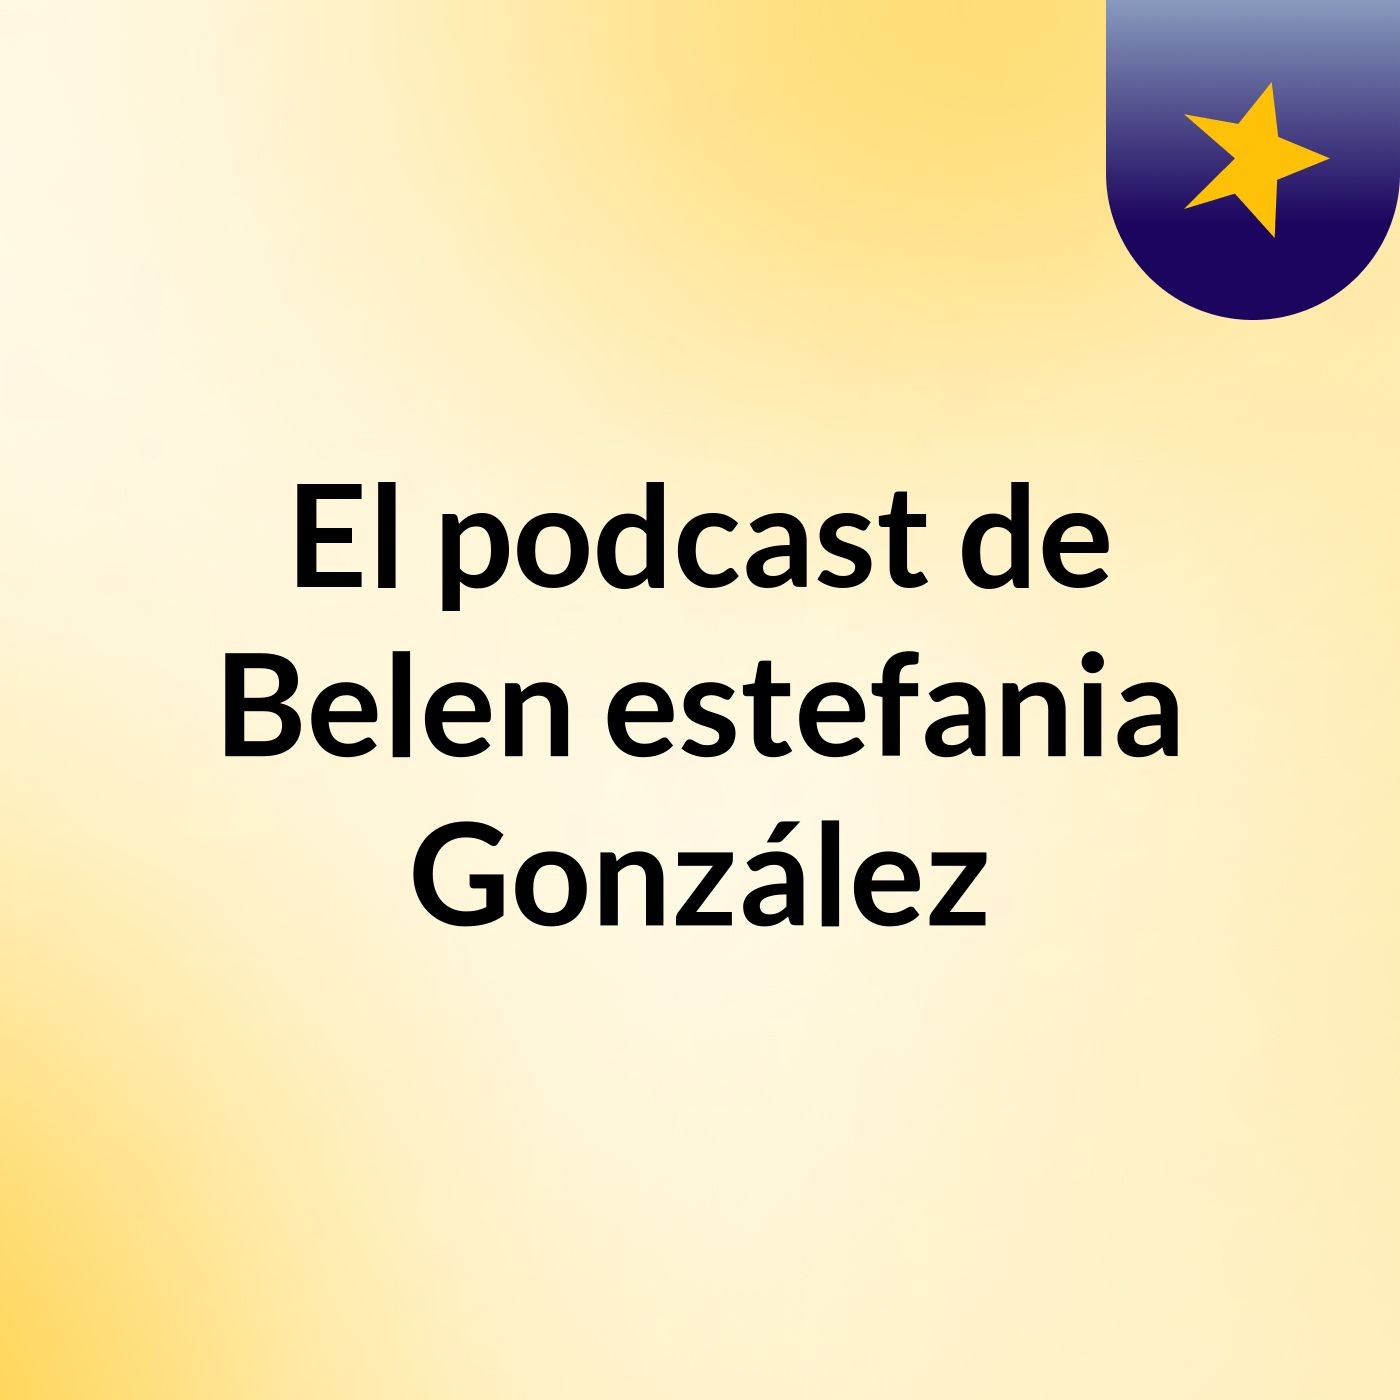 El podcast de Belen estefania González